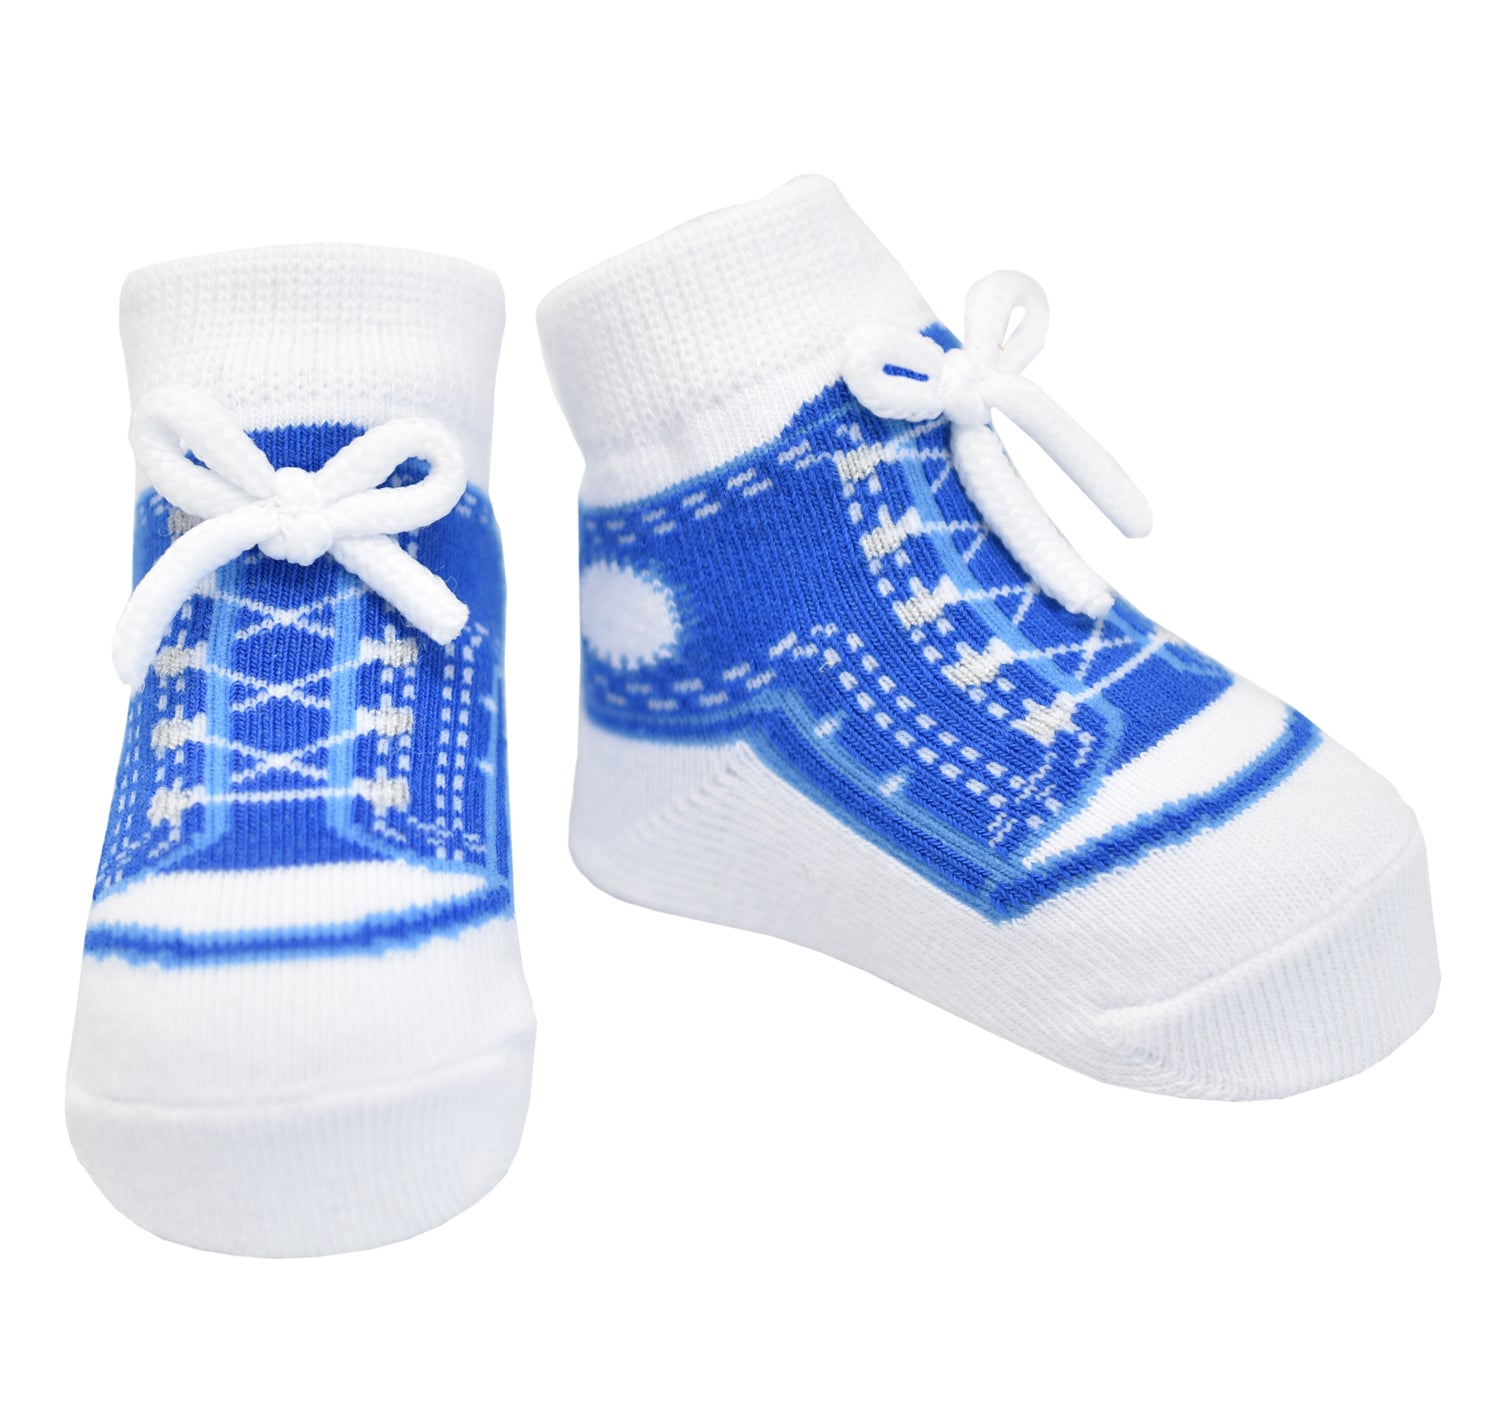 Blue sneaker look socks for infant baby boy newborn gift 